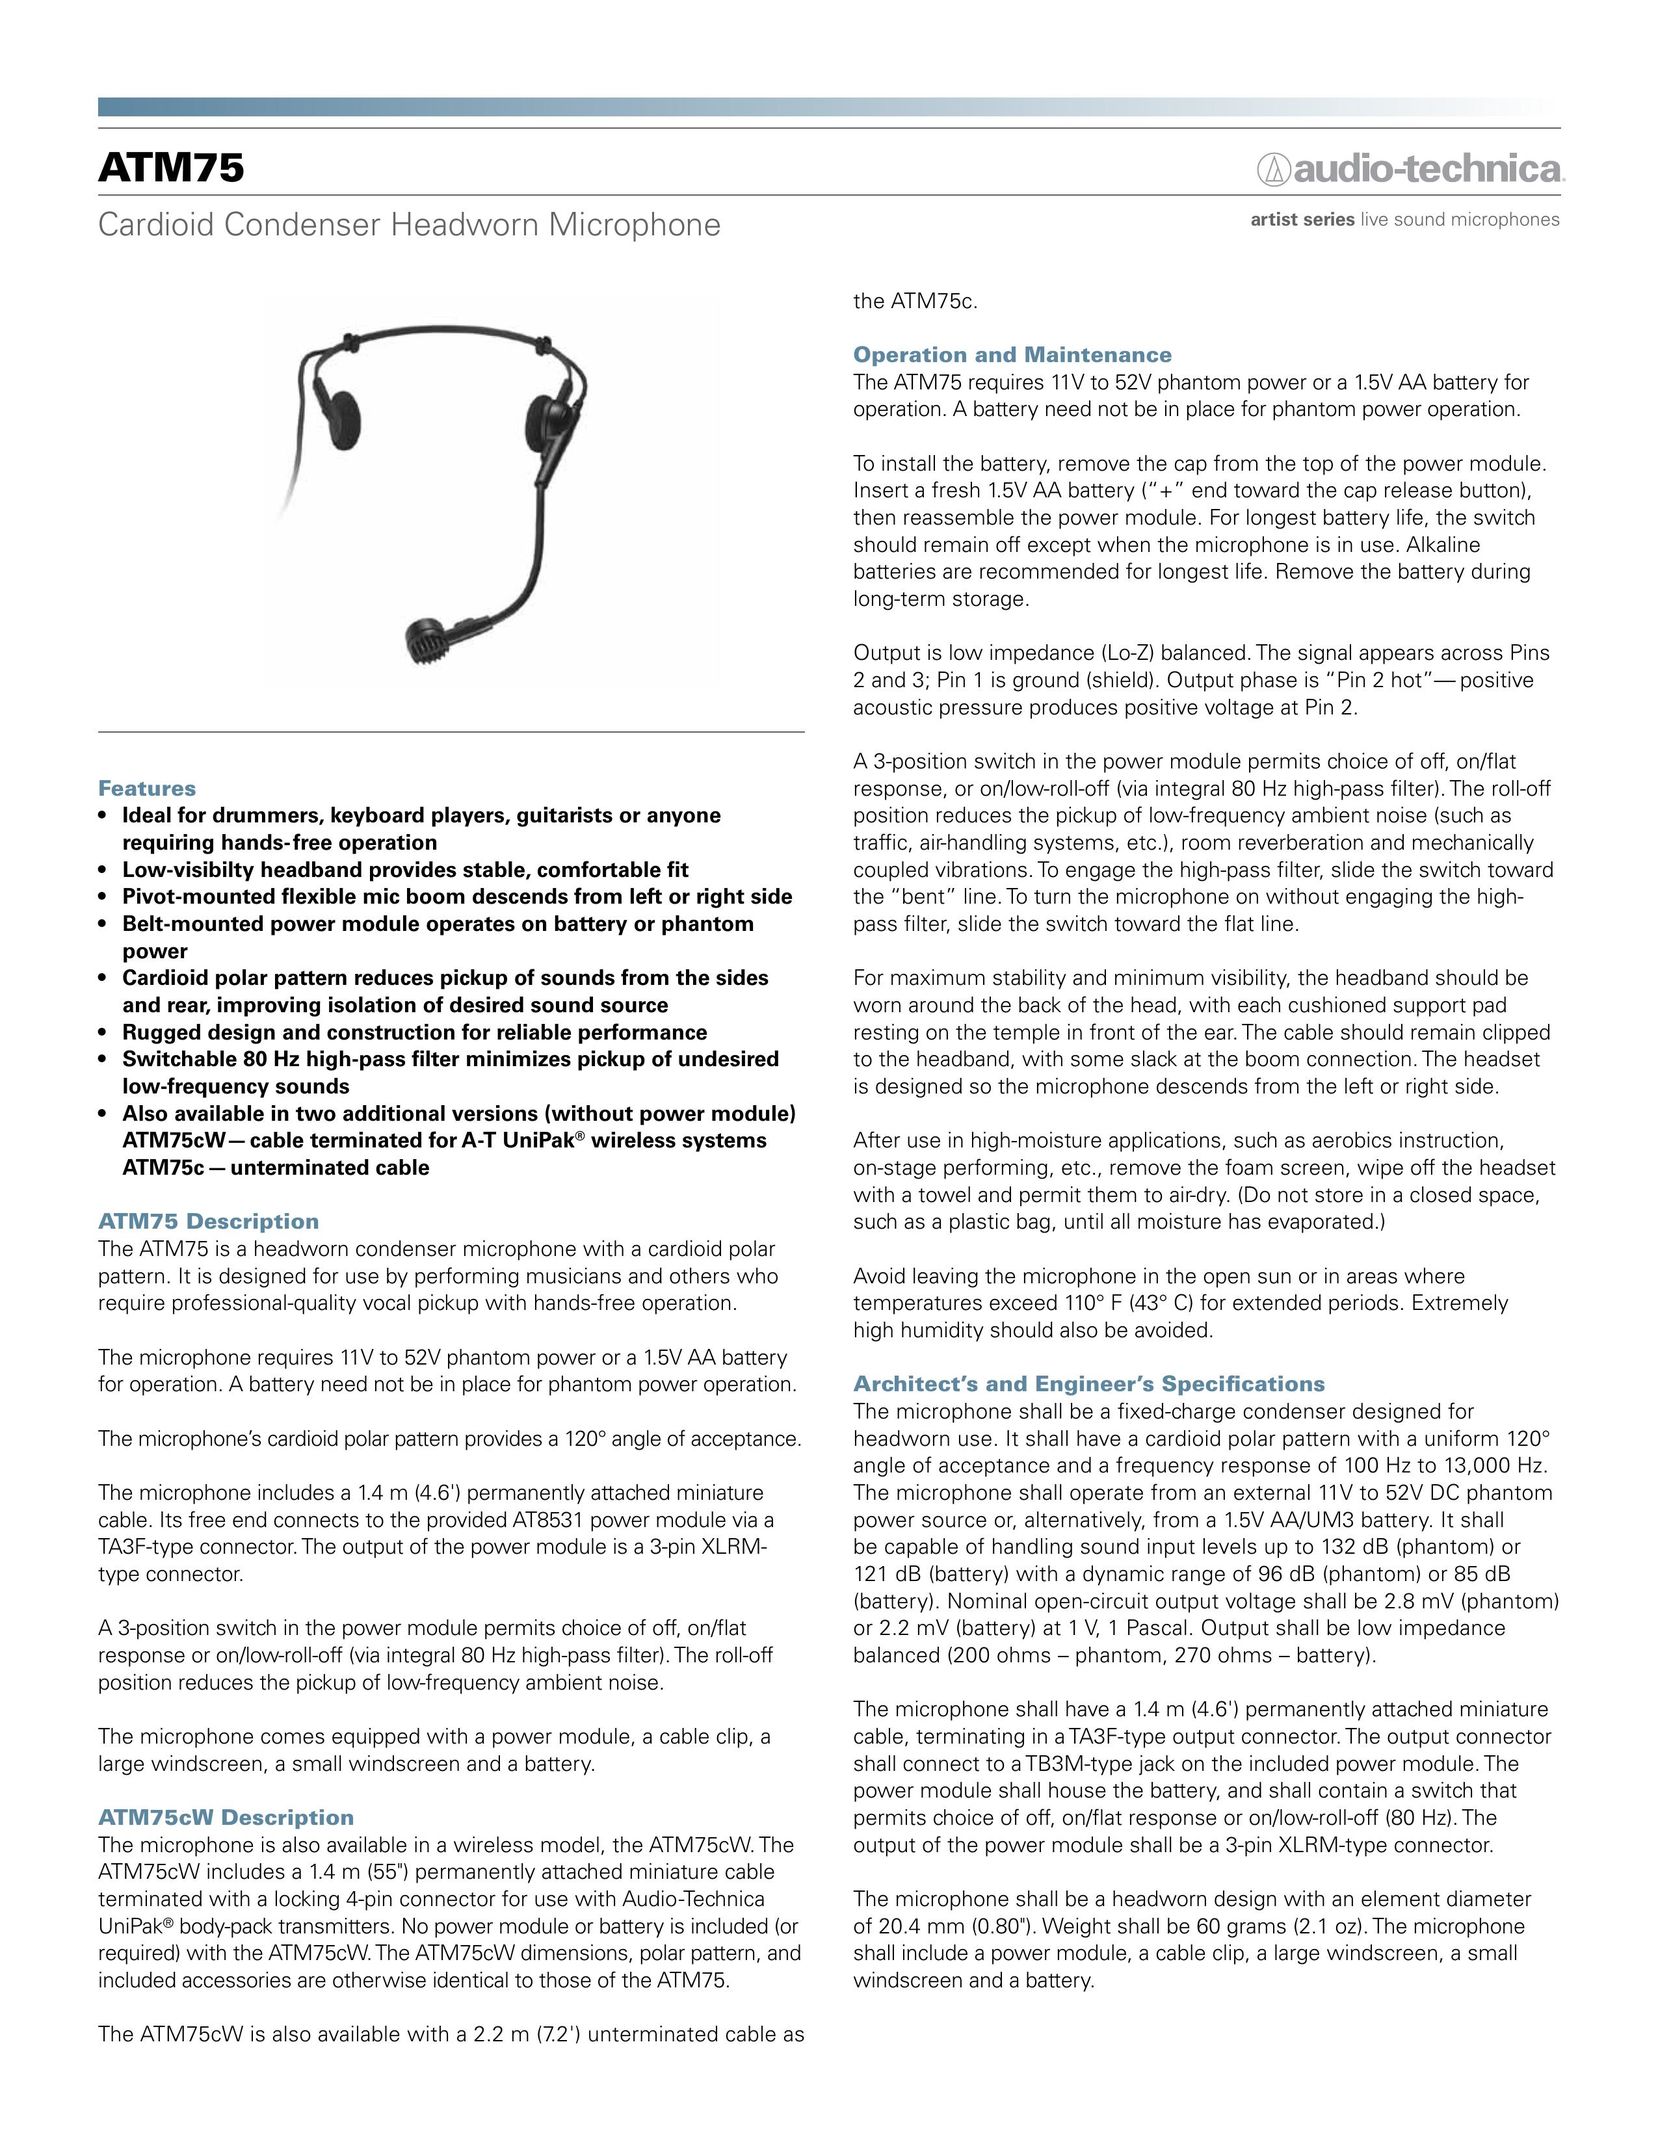 Audio-Technica ATM75 Headphones User Manual